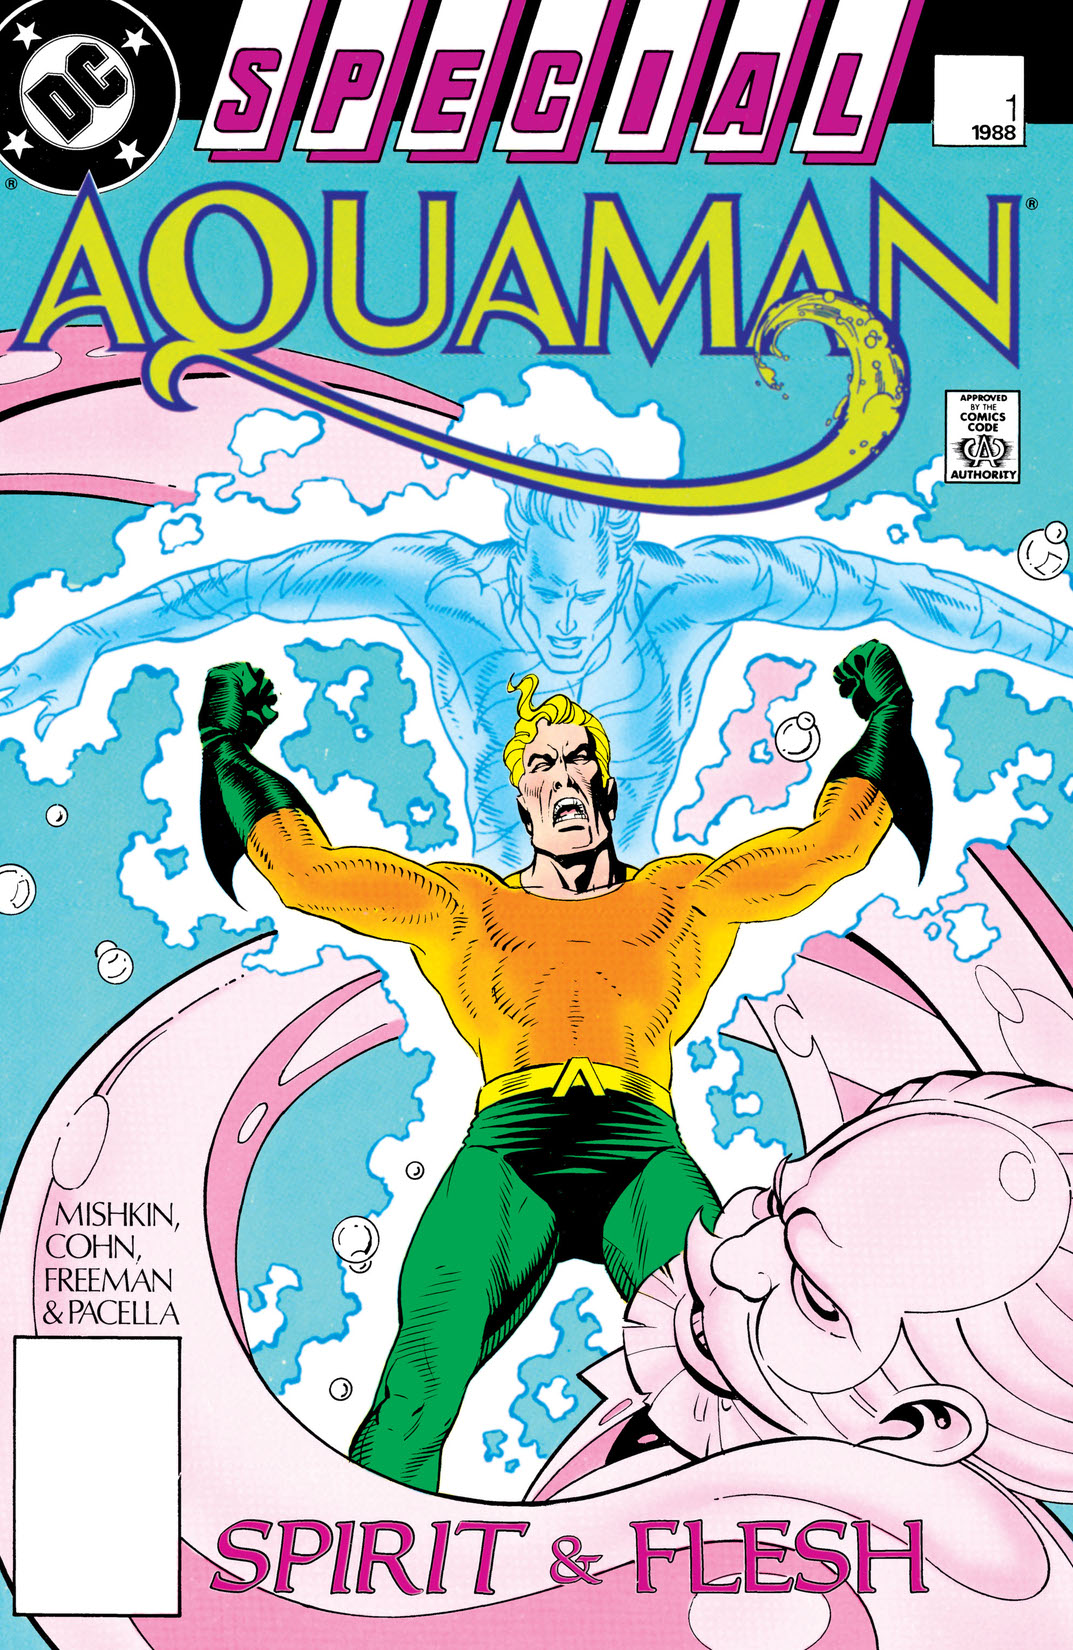 Aquaman Special () #1 preview images